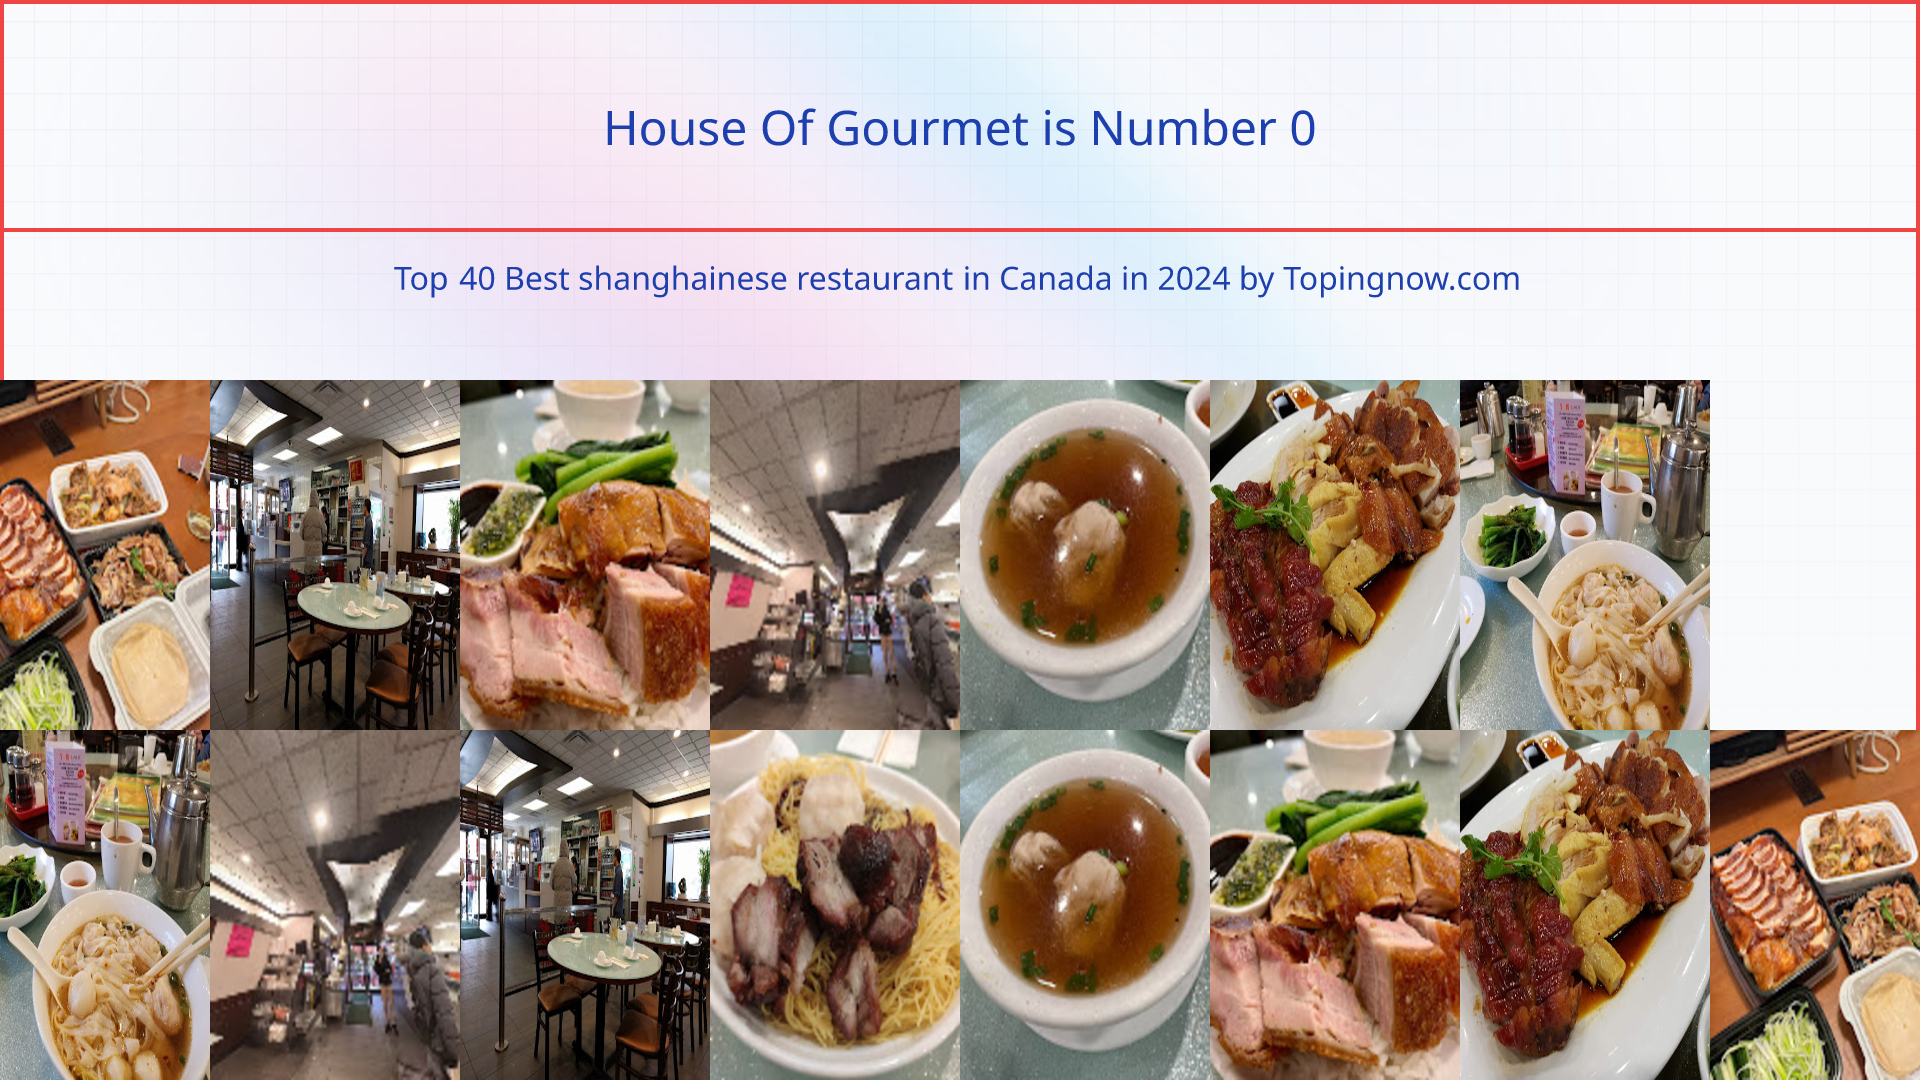 House Of Gourmet: Top 40 Best shanghainese restaurant in Canada in 2024